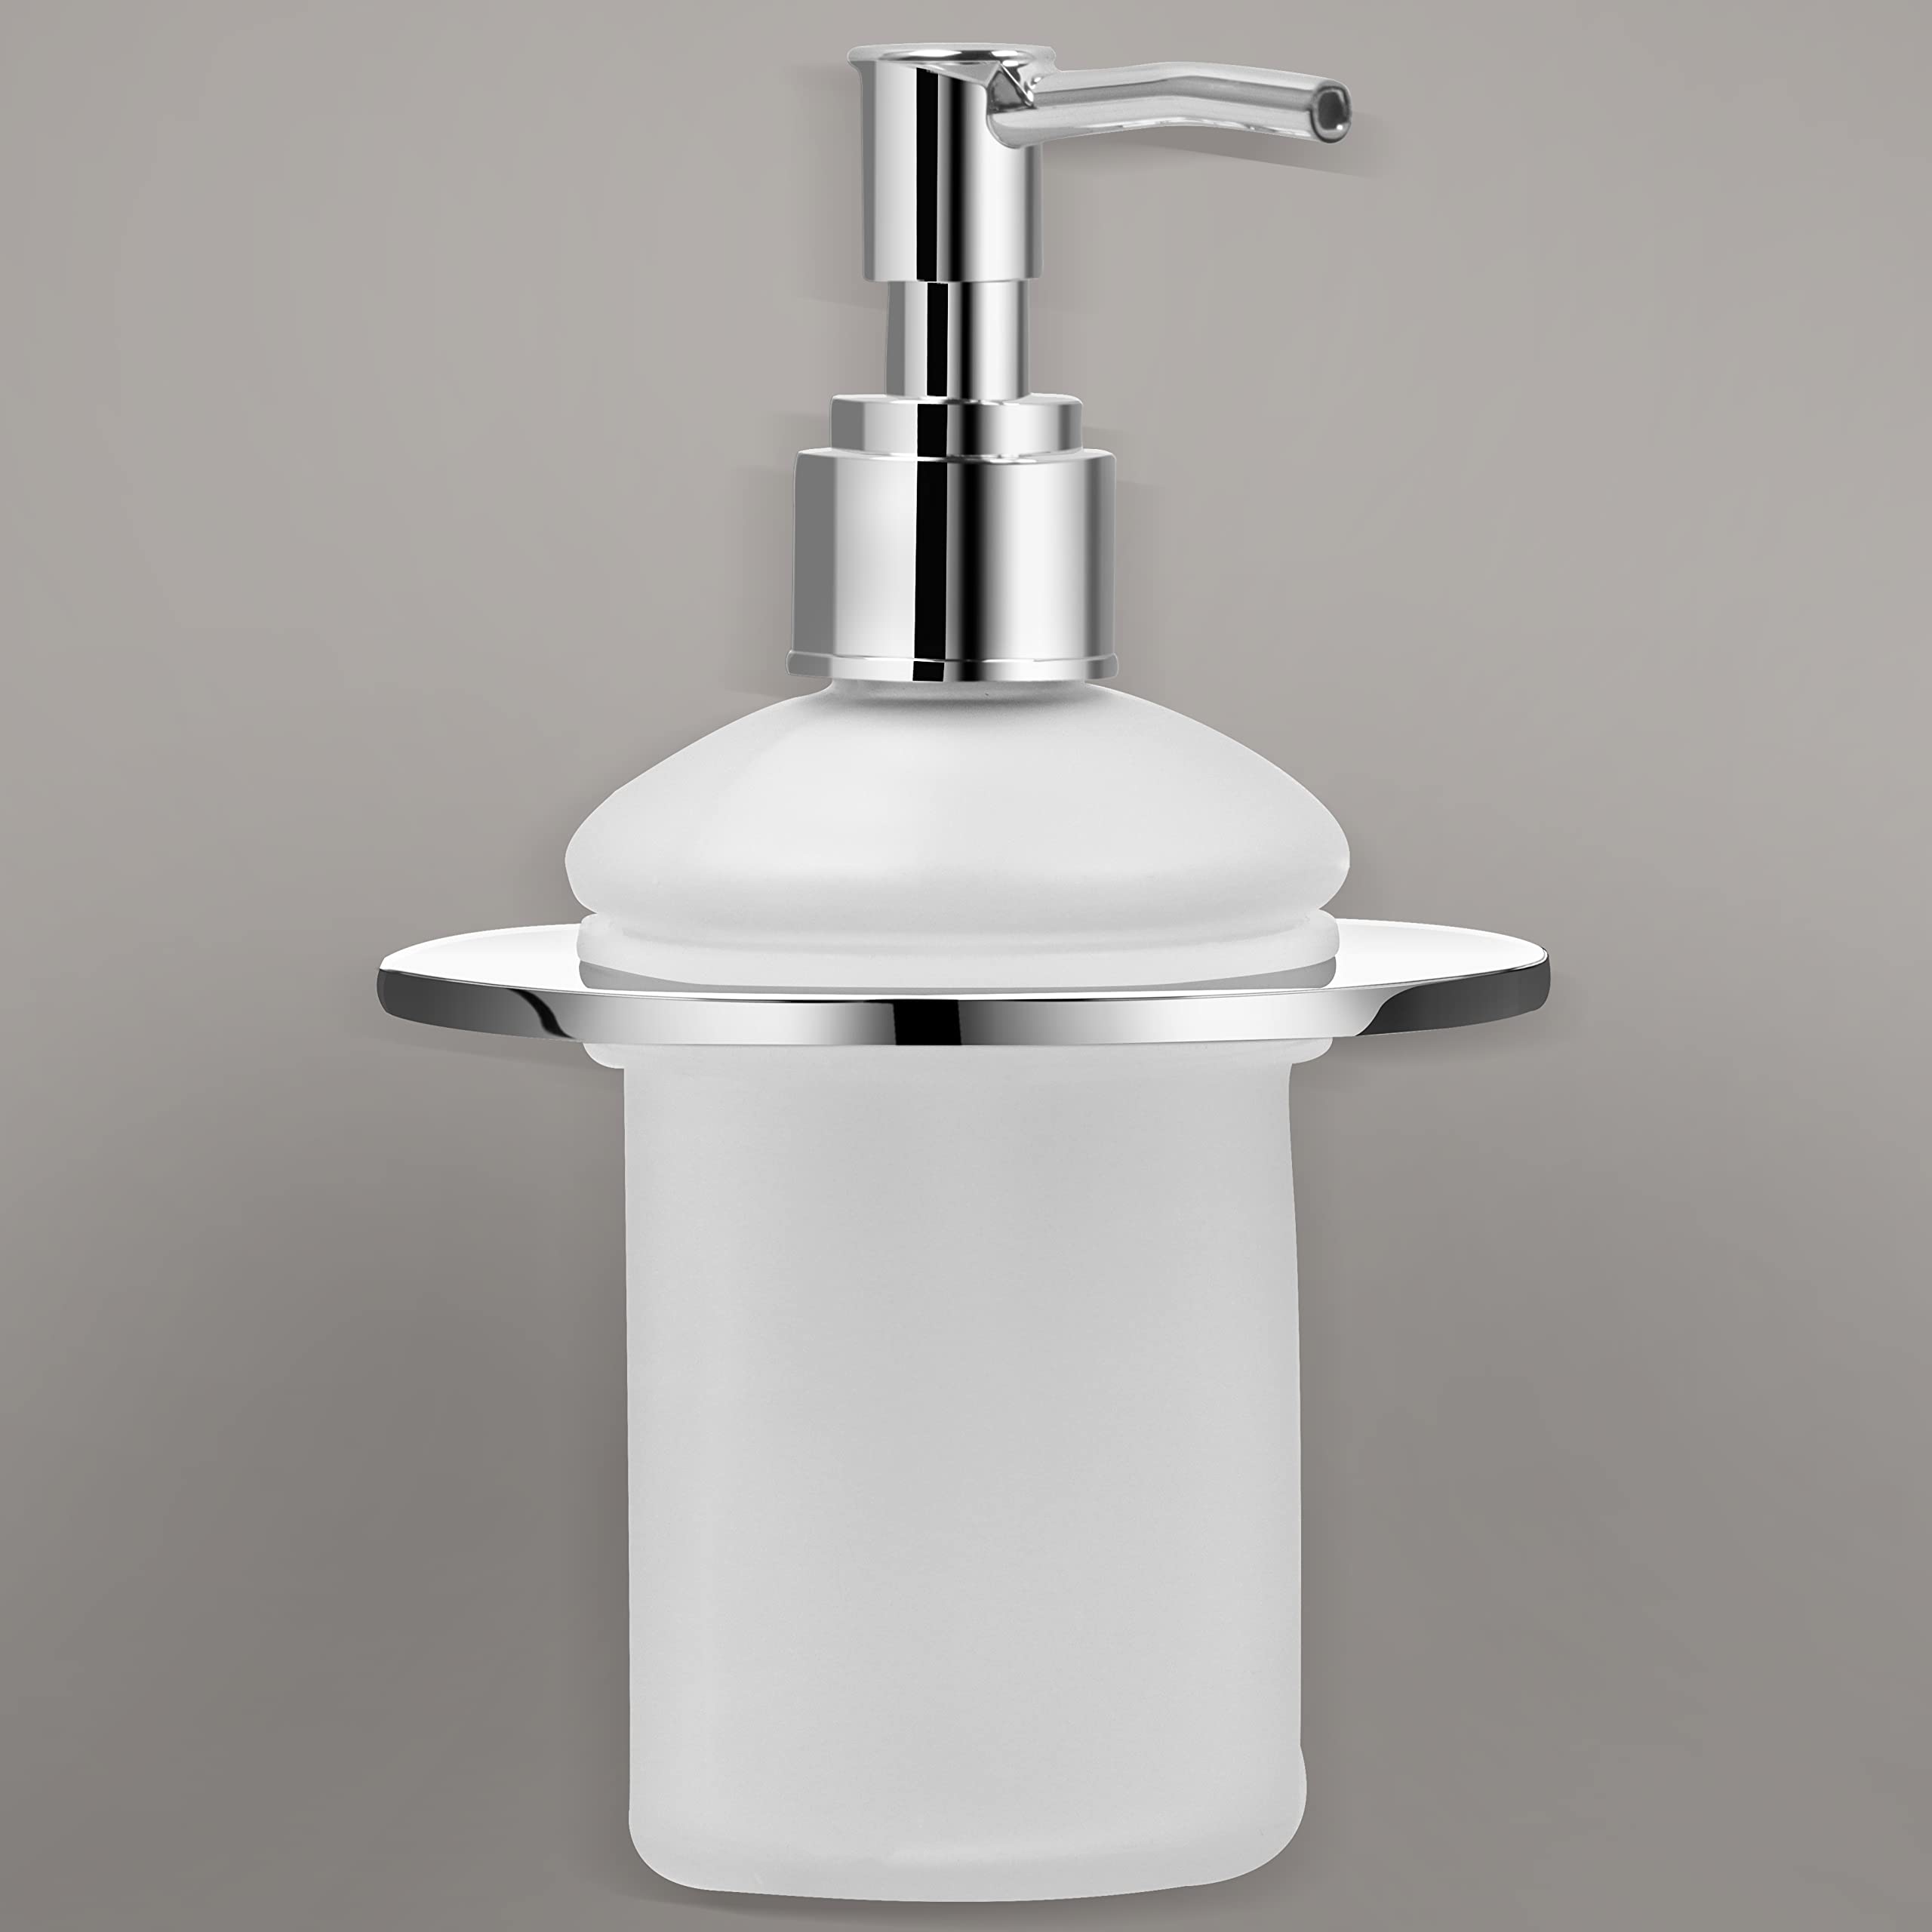 Plantex Fully Brass Smero Liquid Soap Dispenser/Hand Wash Dispenser/Shampoo Dispenser/Bathroom Accessories - Chrome (AQ-8136)